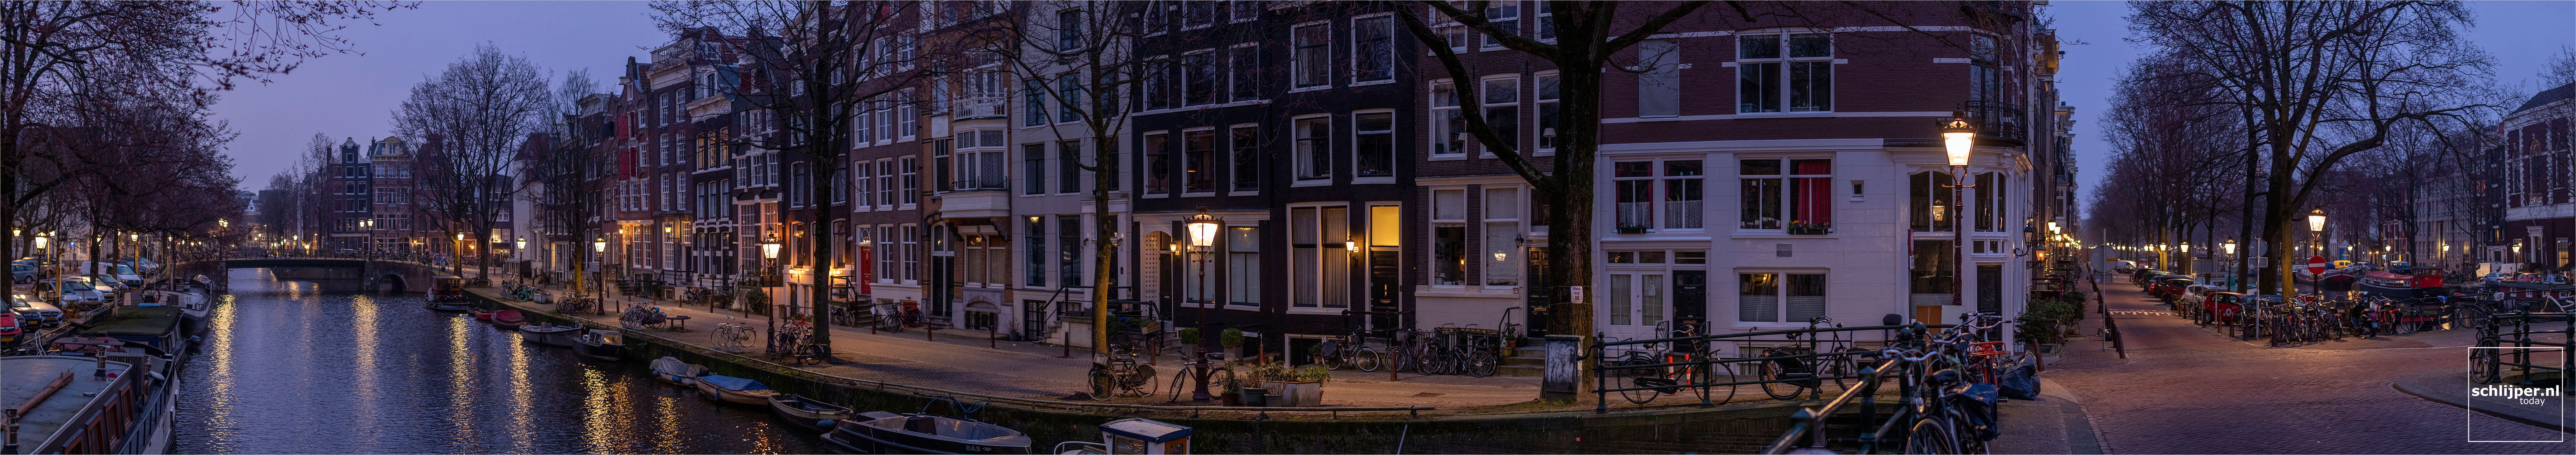 The Netherlands, Amsterdam, 1 maart 2021